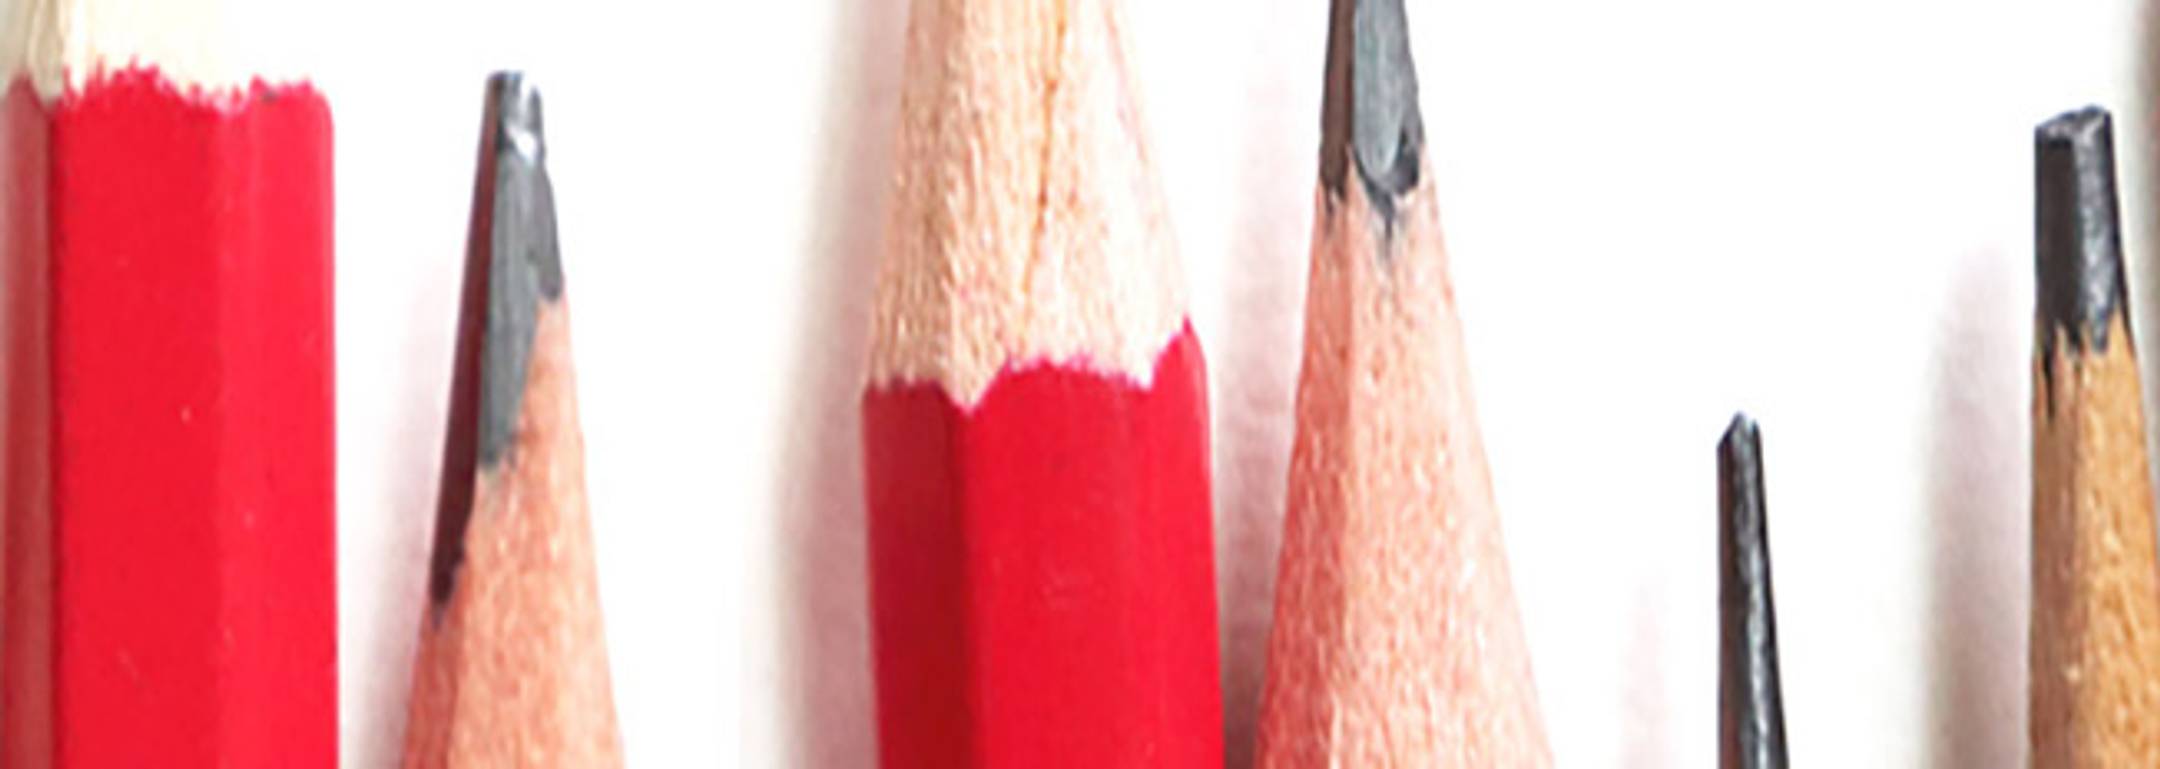 H Pencils 